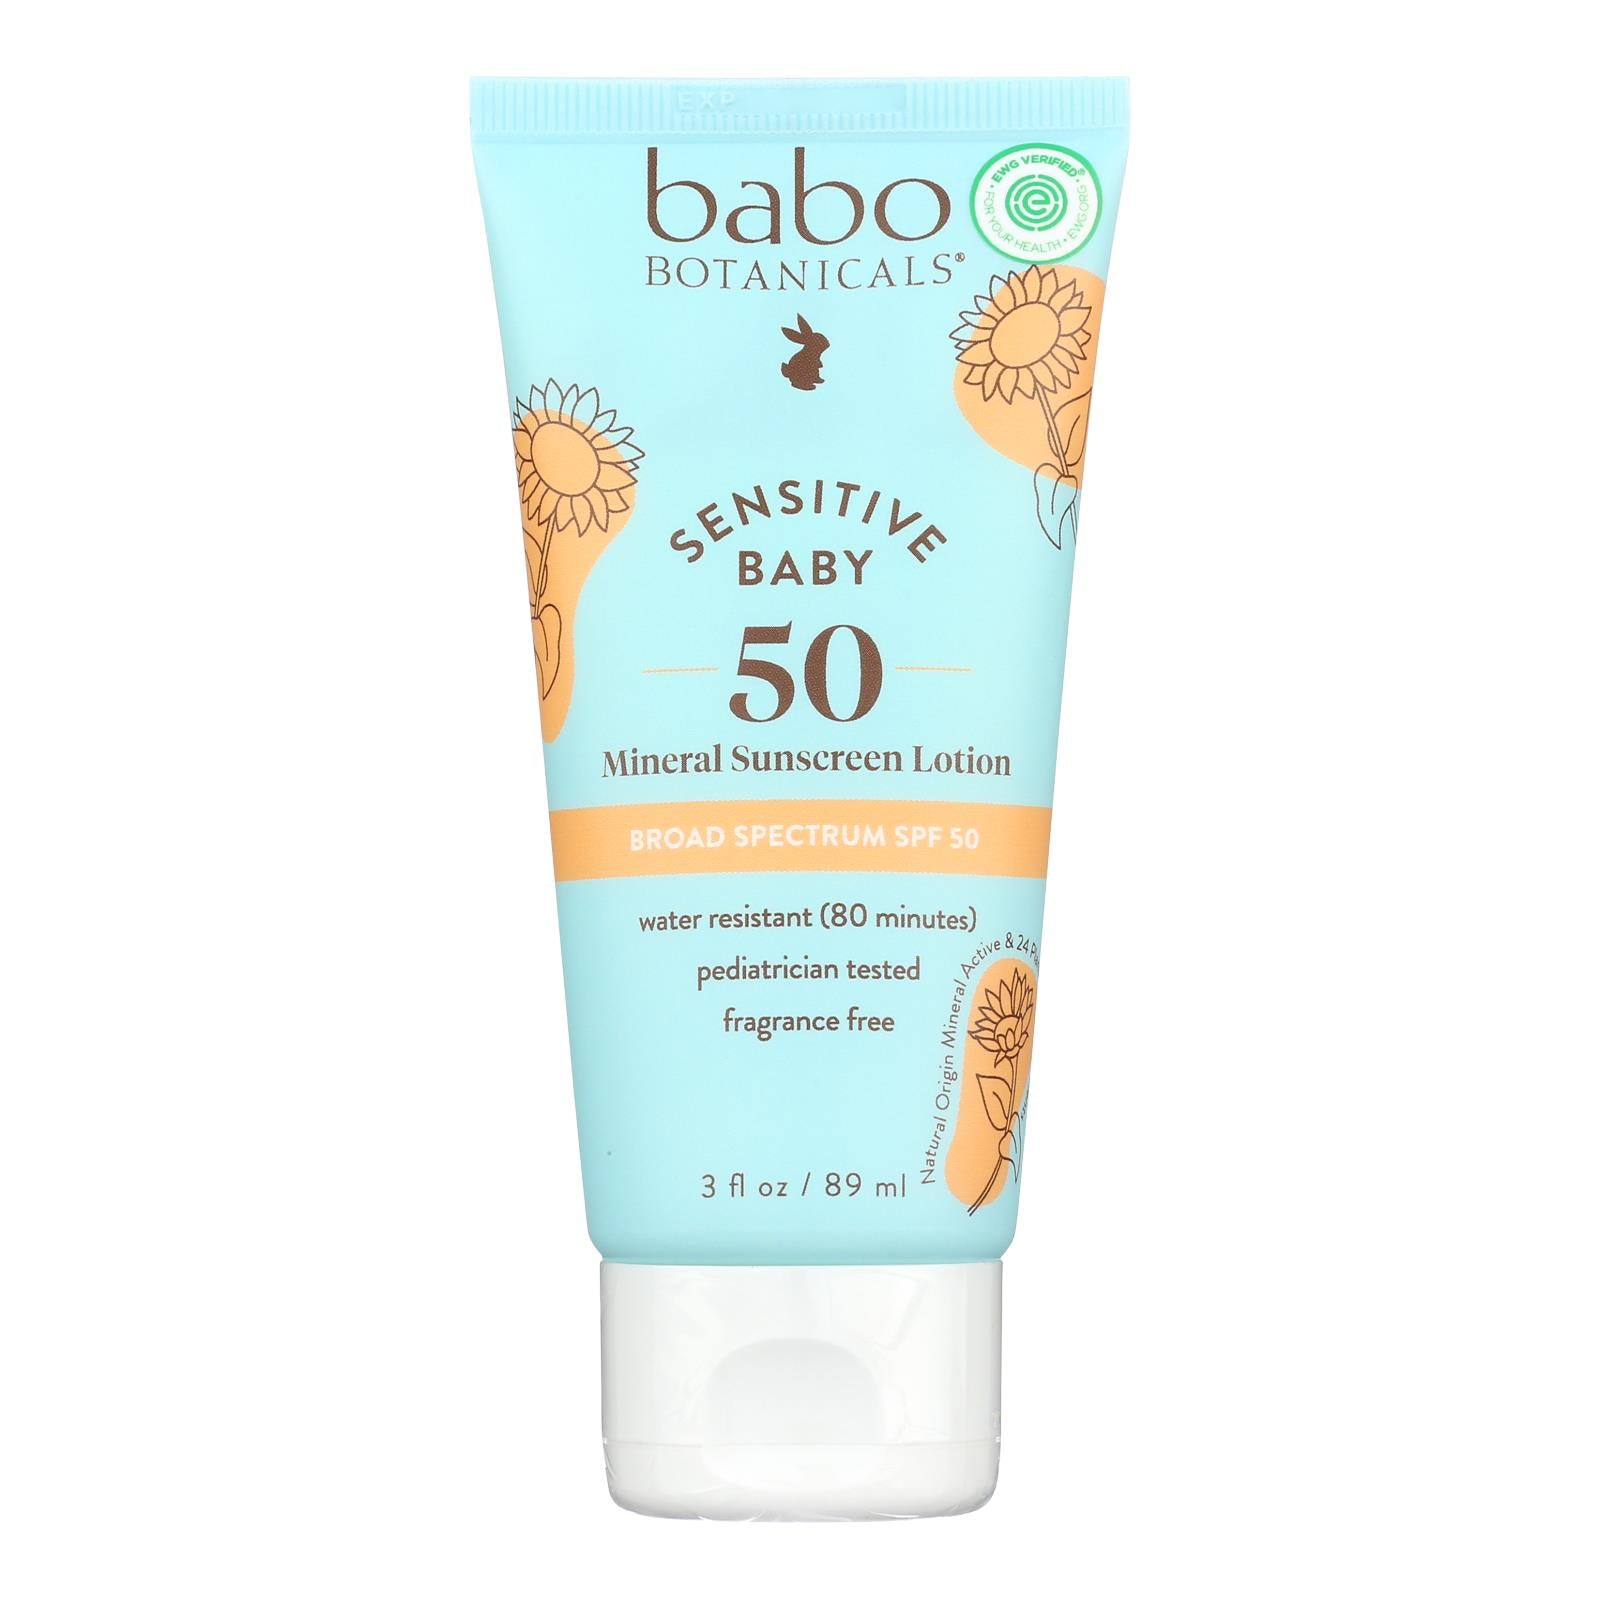 Babo Botanicals - Baby Skin Mineral Sunscreen - Spf 50 - 3 Oz.